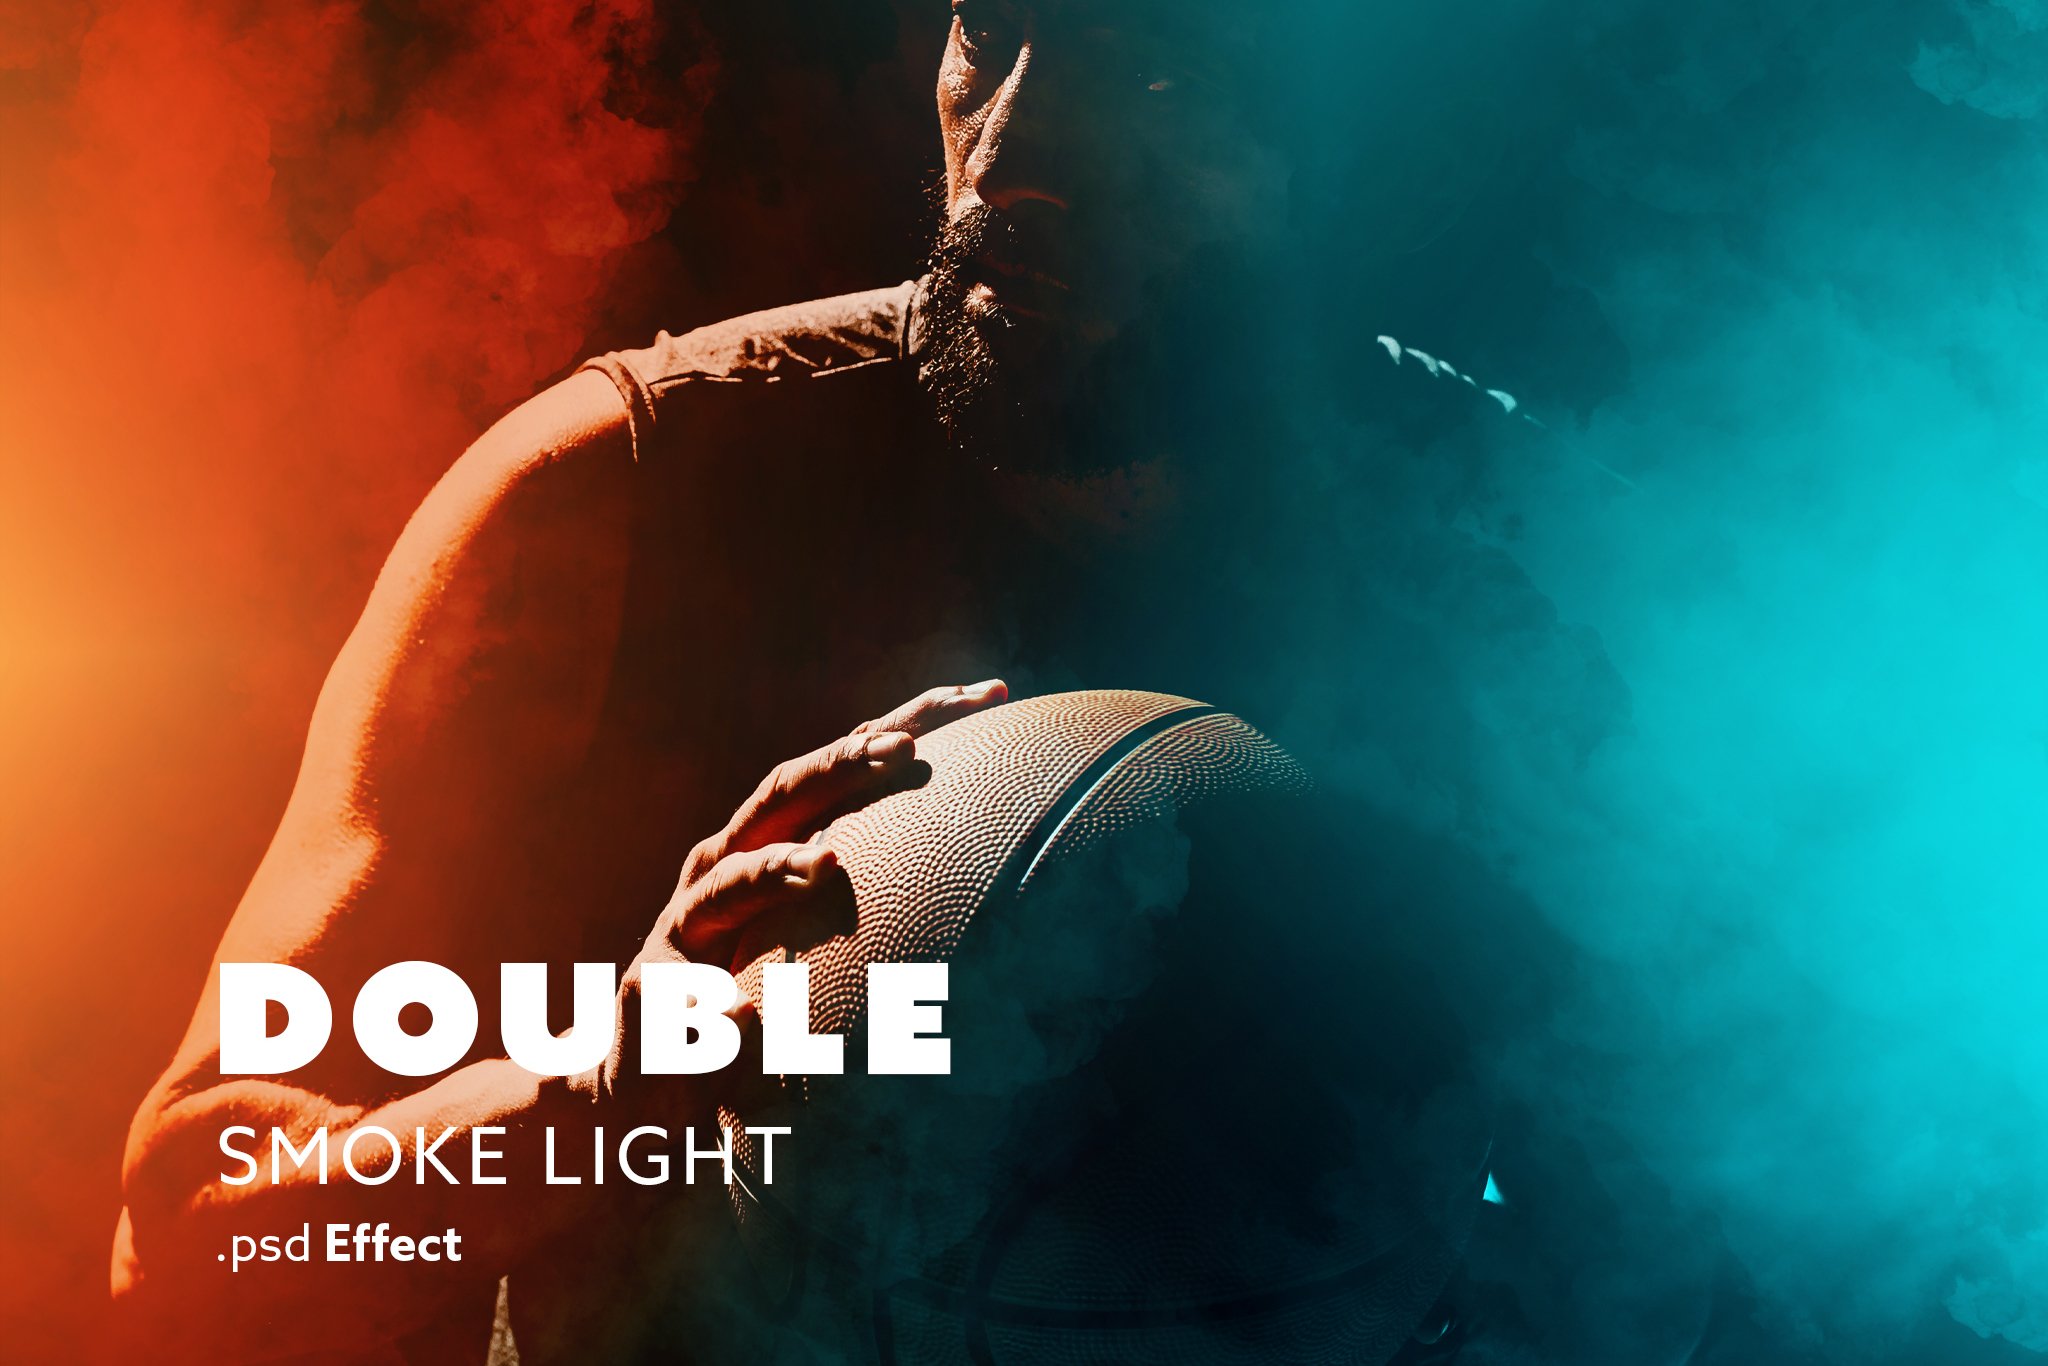 Double Smoke Light Effectcover image.